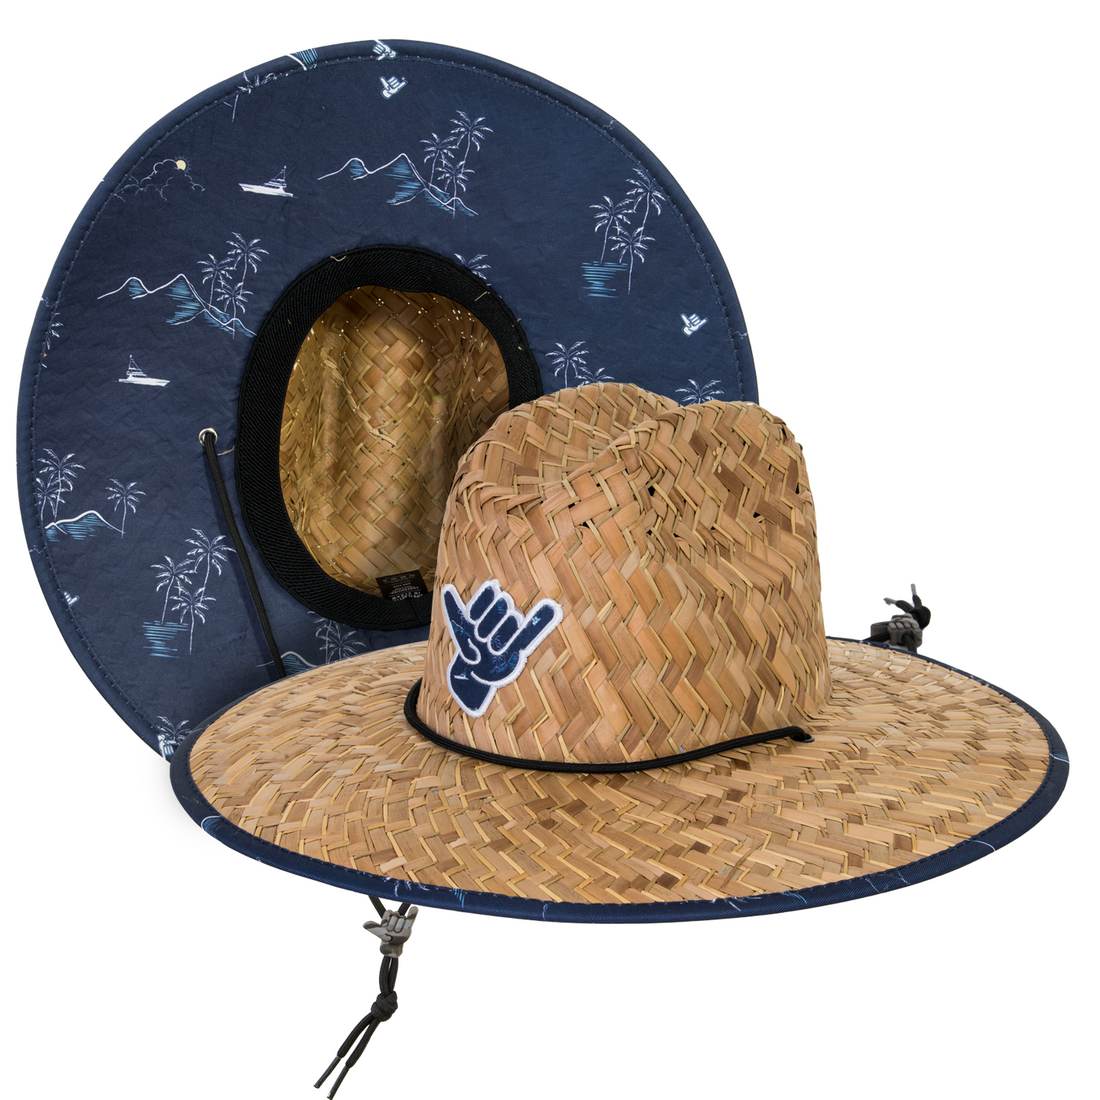 Blue Hawaii Straw Hat